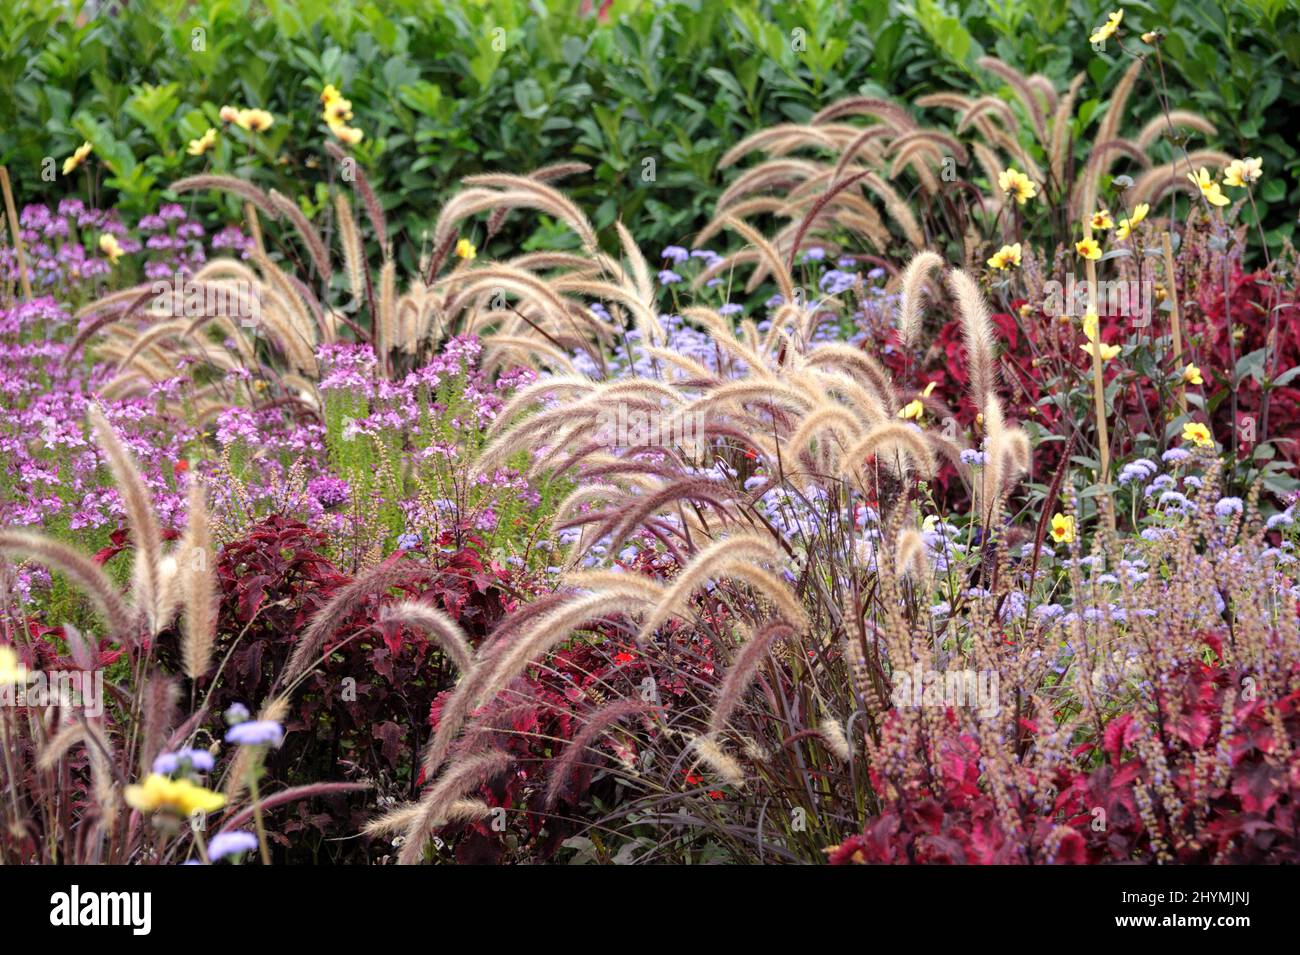 fountain grass, crimson fountaingrass (Pennisetum setaceum 'Rubrum', Pennisetum setaceum Rubrum), cultivar Rubrum, Europe Stock Photo